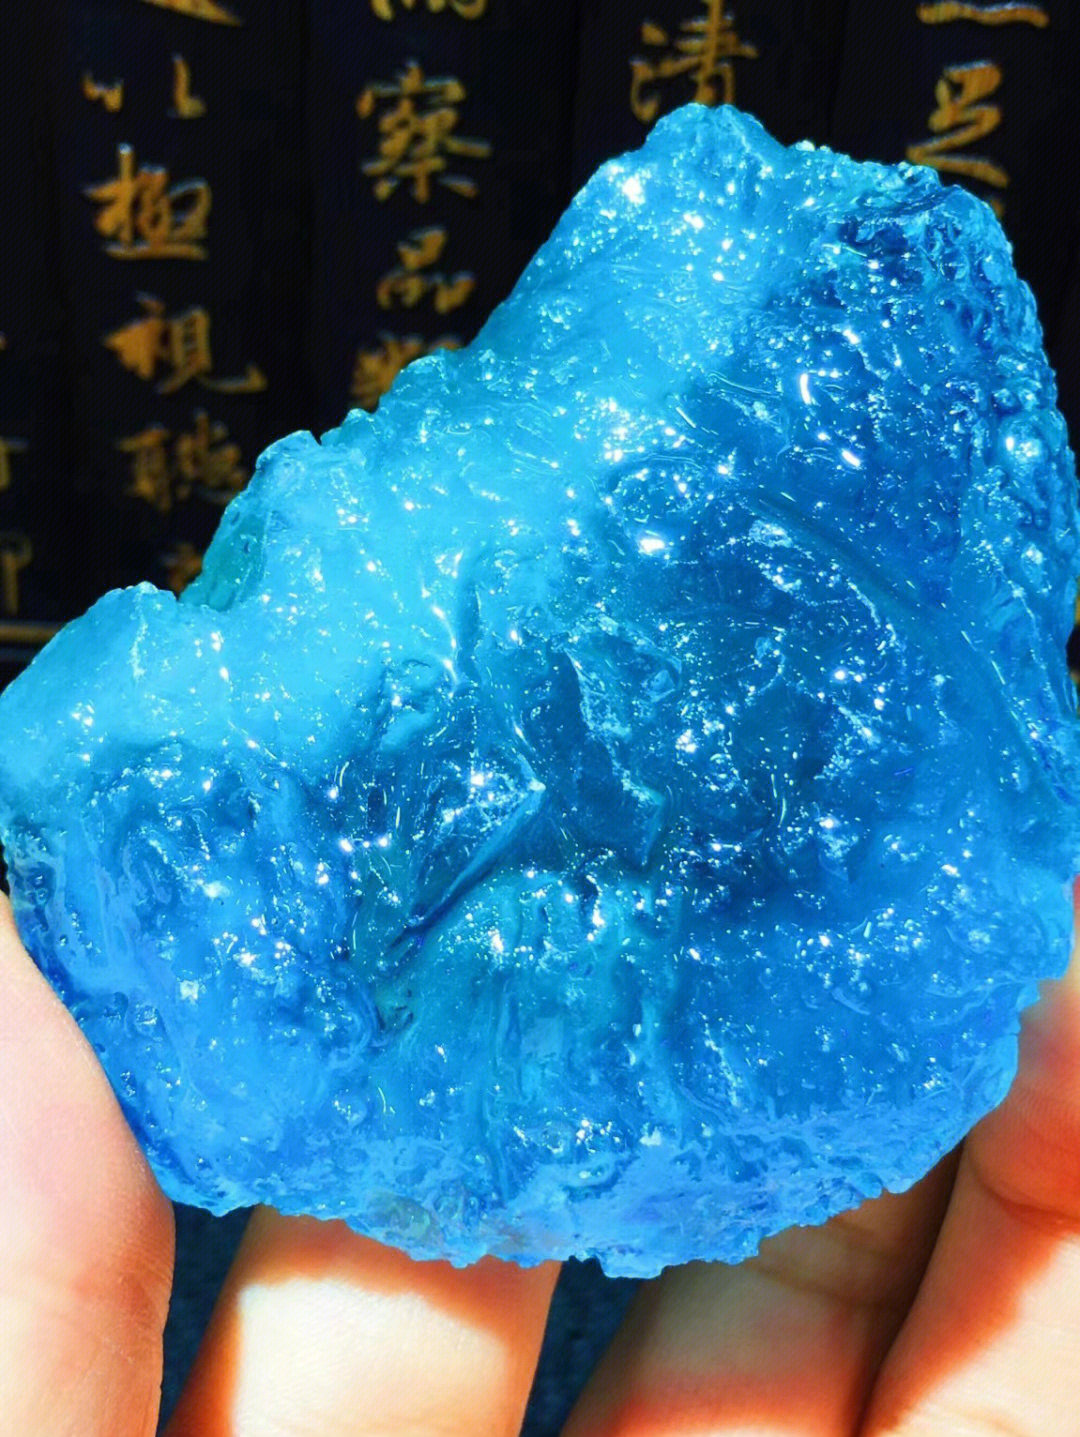 b3436278超美精品海蓝宝原石,晶体通透,极品海水蓝,象征爱与和平